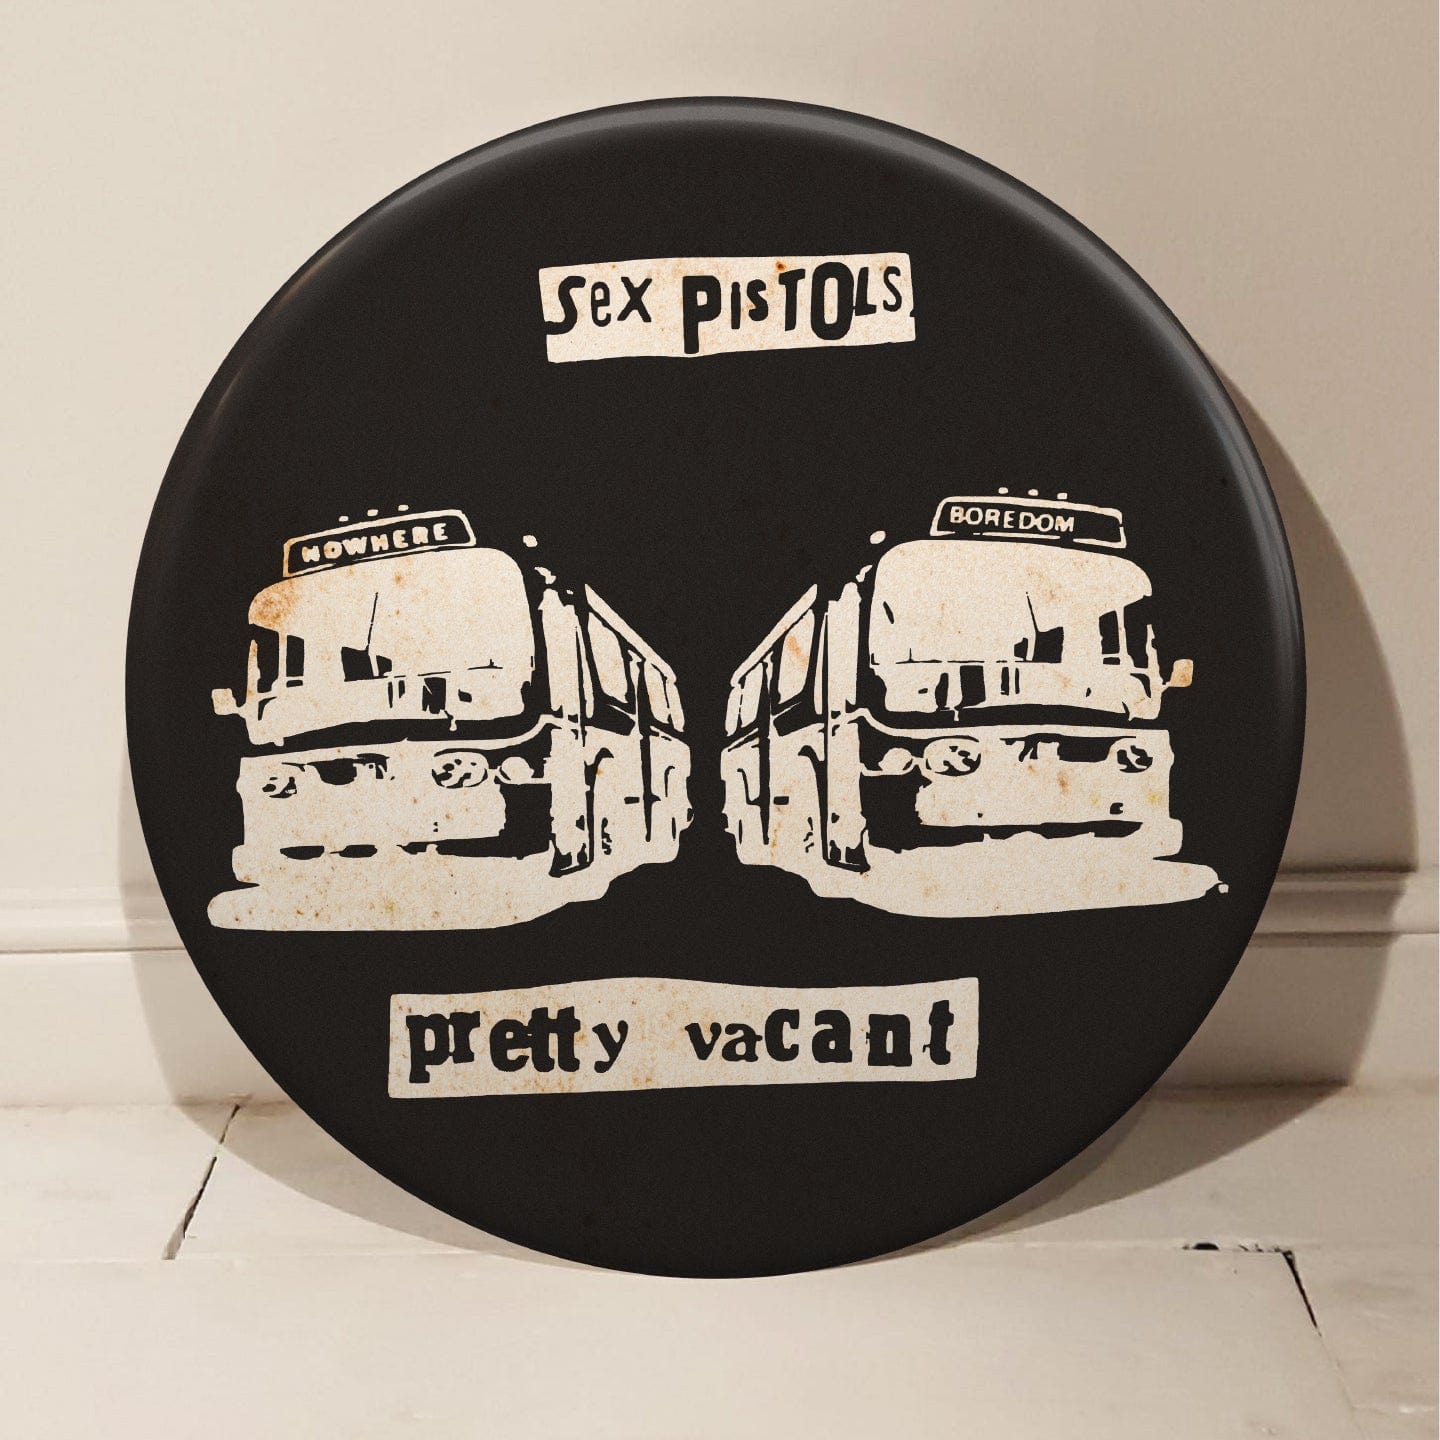 Sex Pistols - Giant 3D Vintage Pin Badge Enlarged